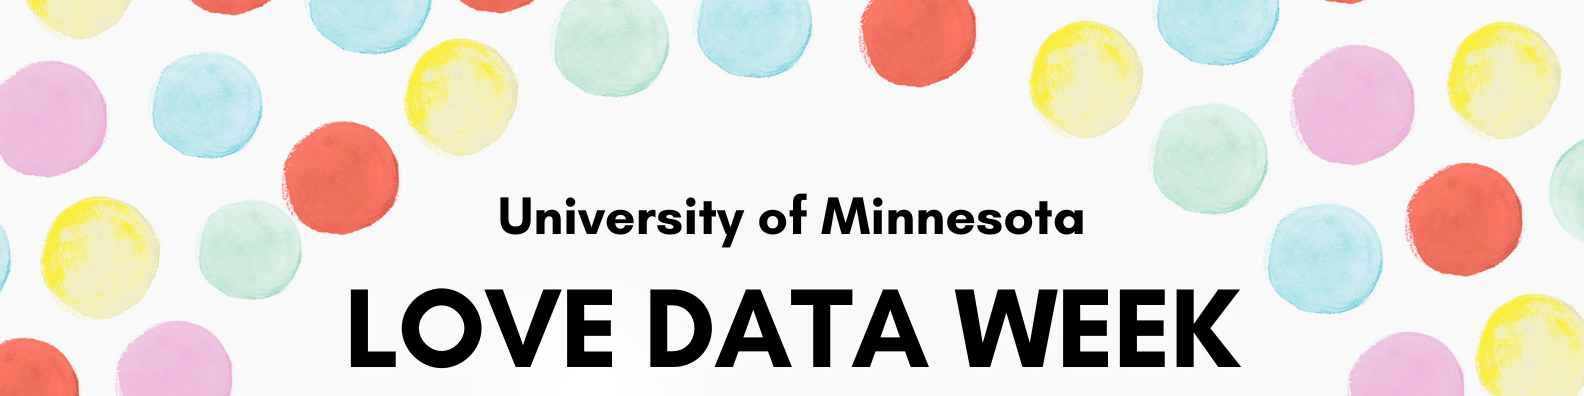 UMN love data week banner